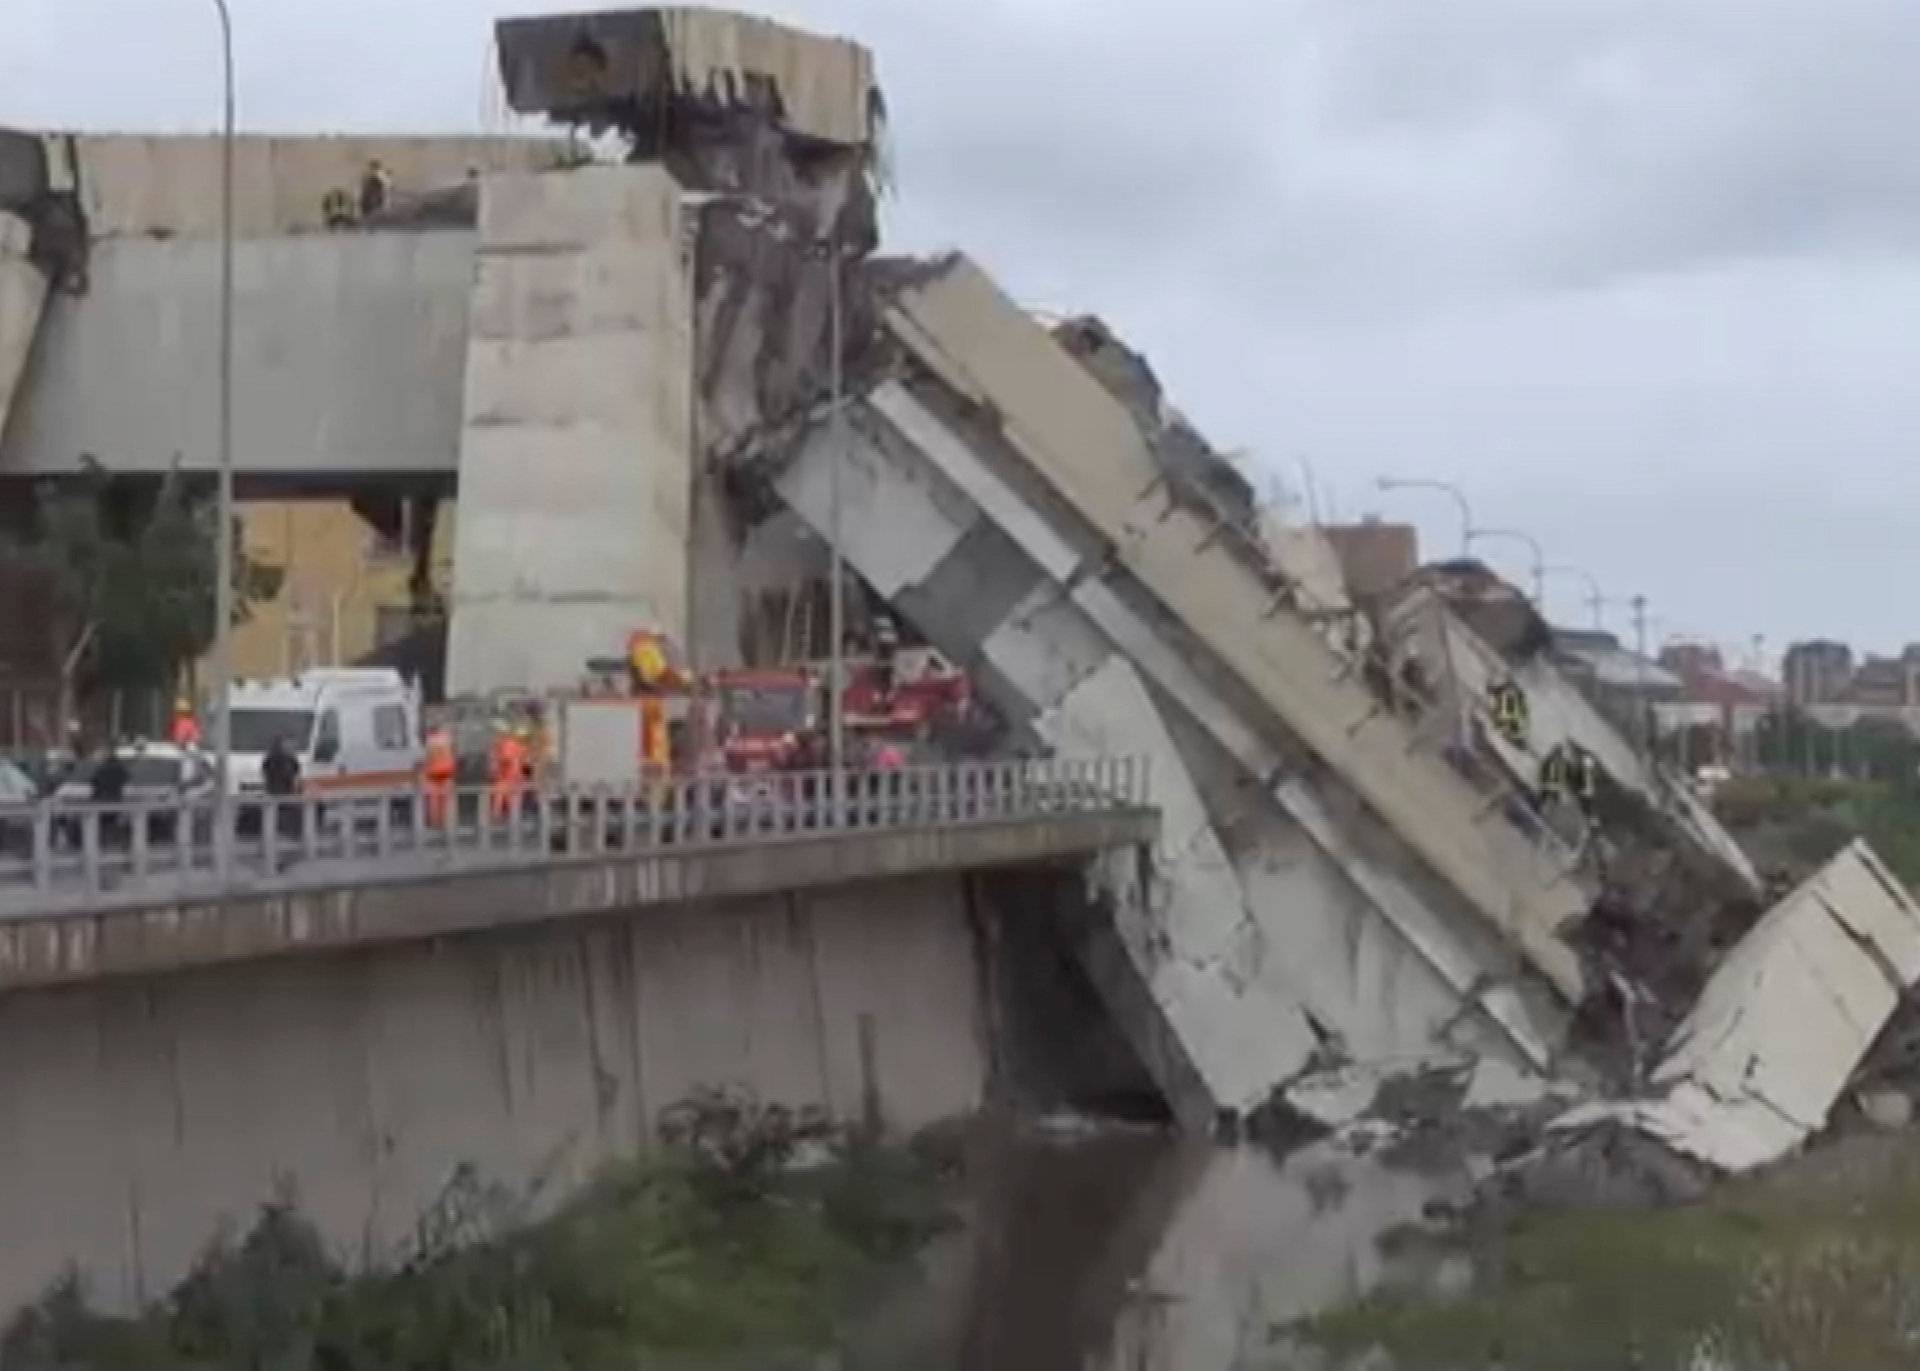 Rescue workers are seen at the collapsed Morandi Bridge in the Italian port city of Genoa